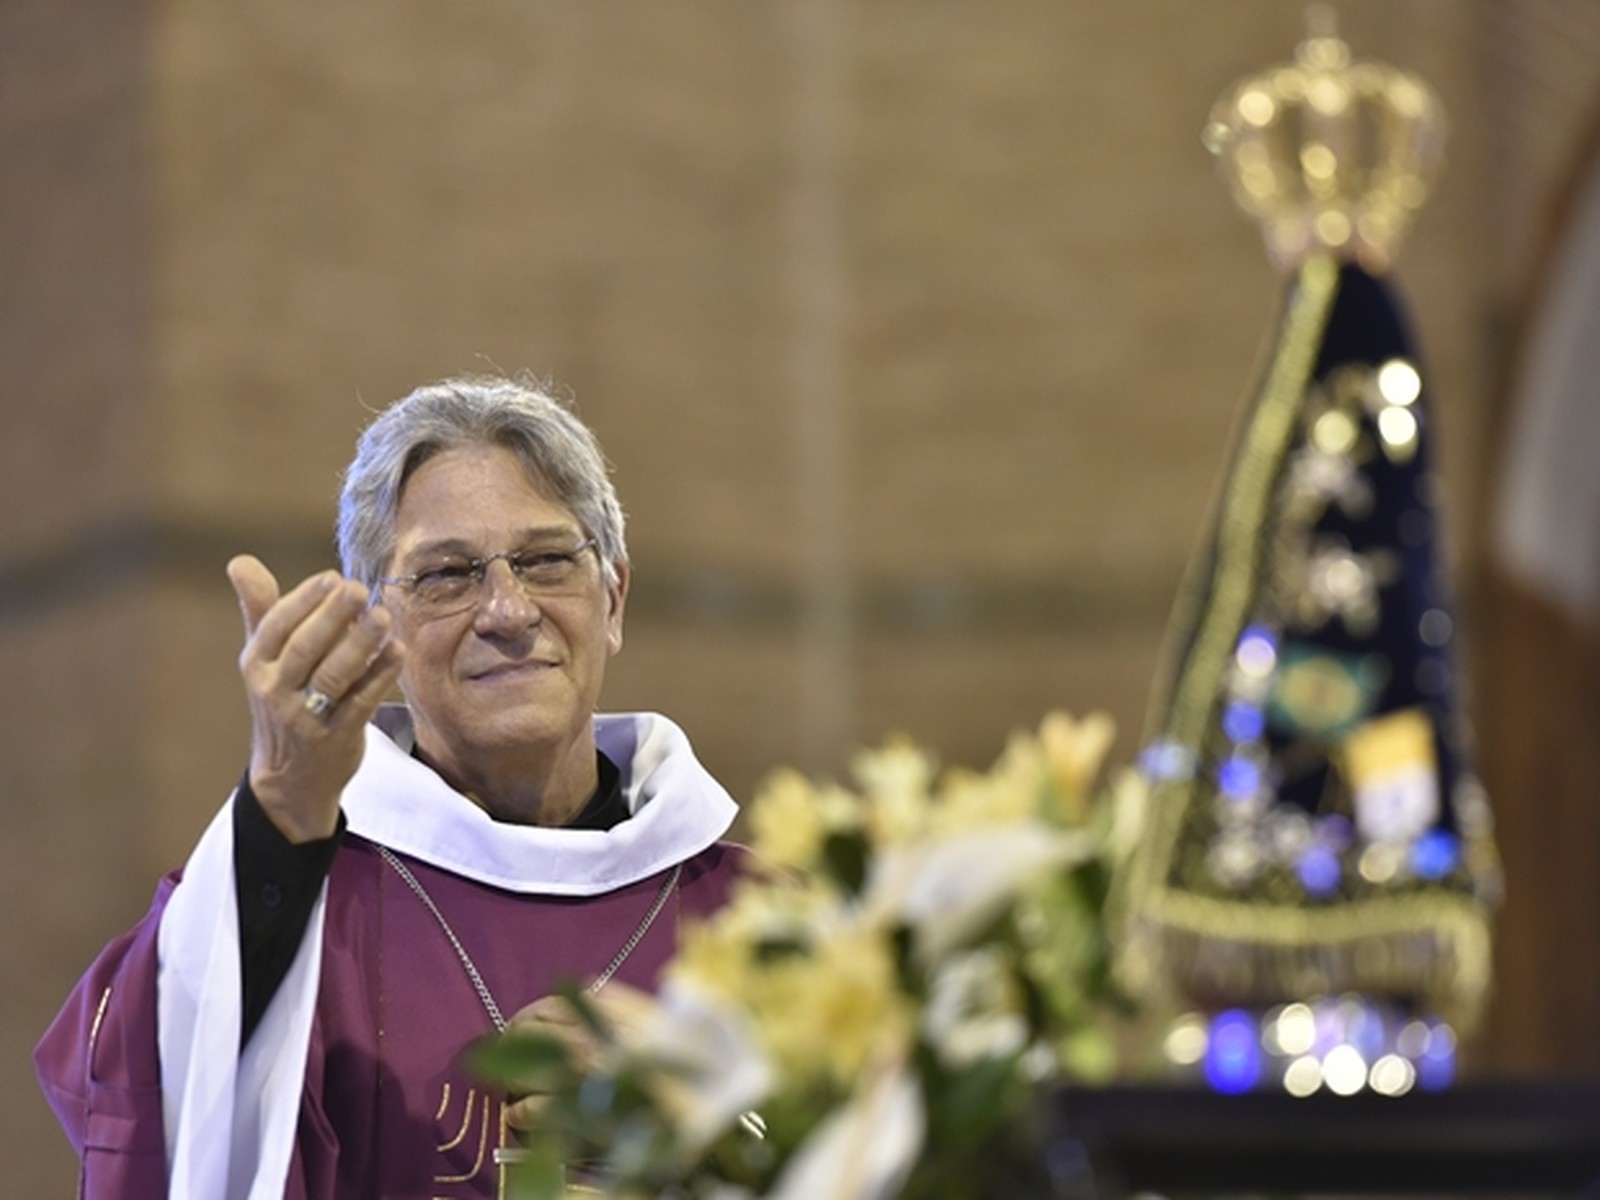 Arcebispo emérito da Paraíba Dom Aldo Pagotto morre aos 70 anos no Ceará